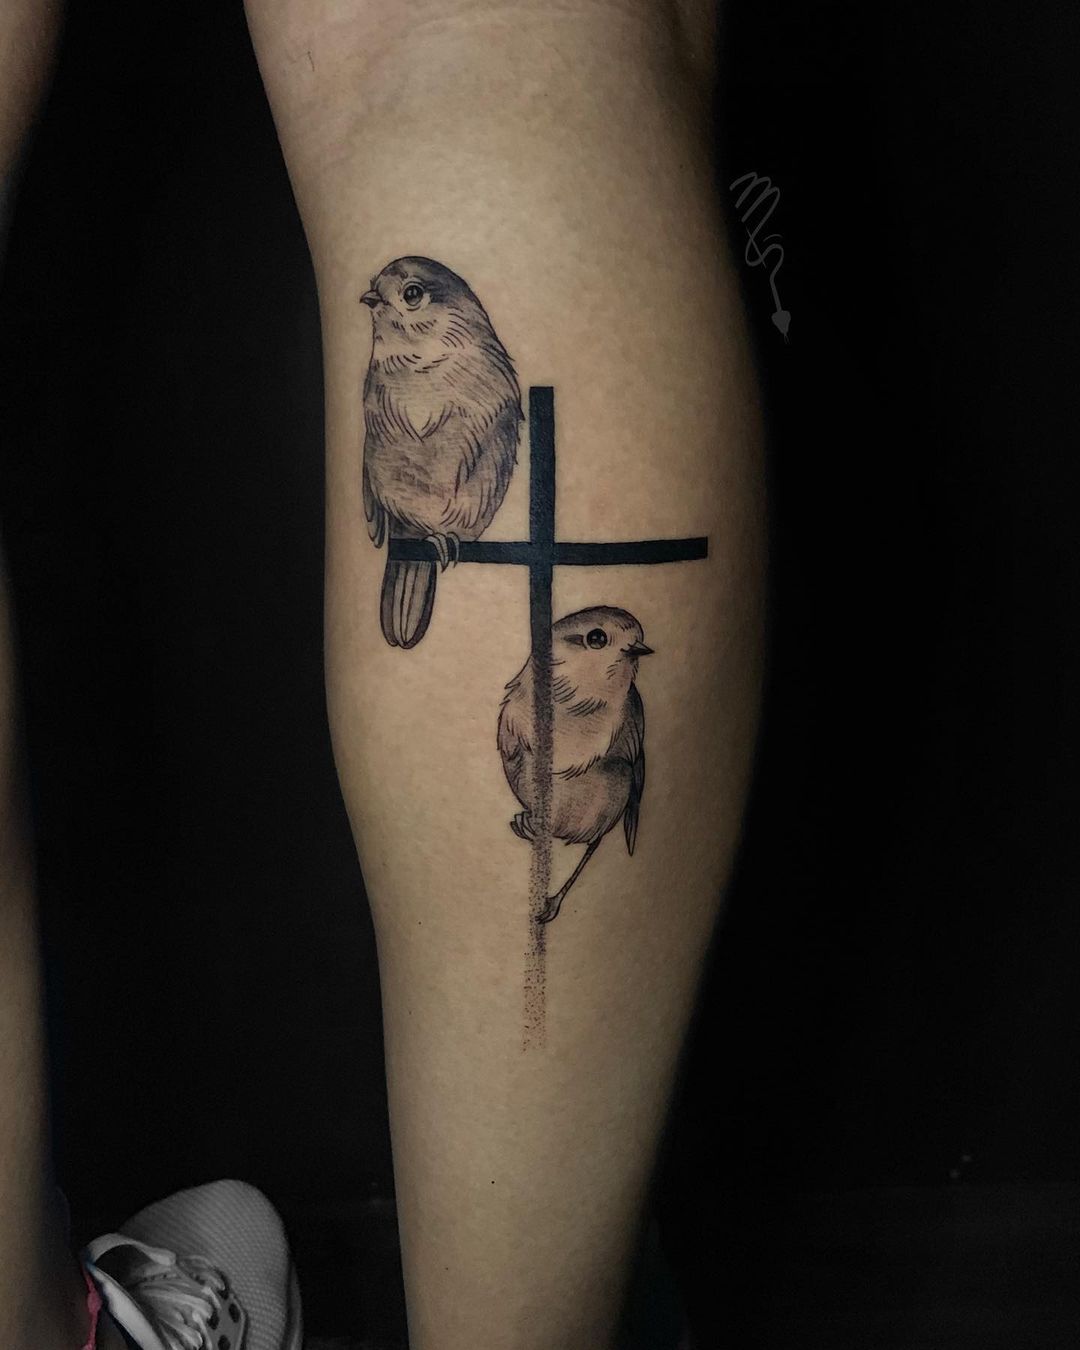 Cross Tattoo Designs: Love Birds Perching on Cross Tattoo, Cross Tattoos